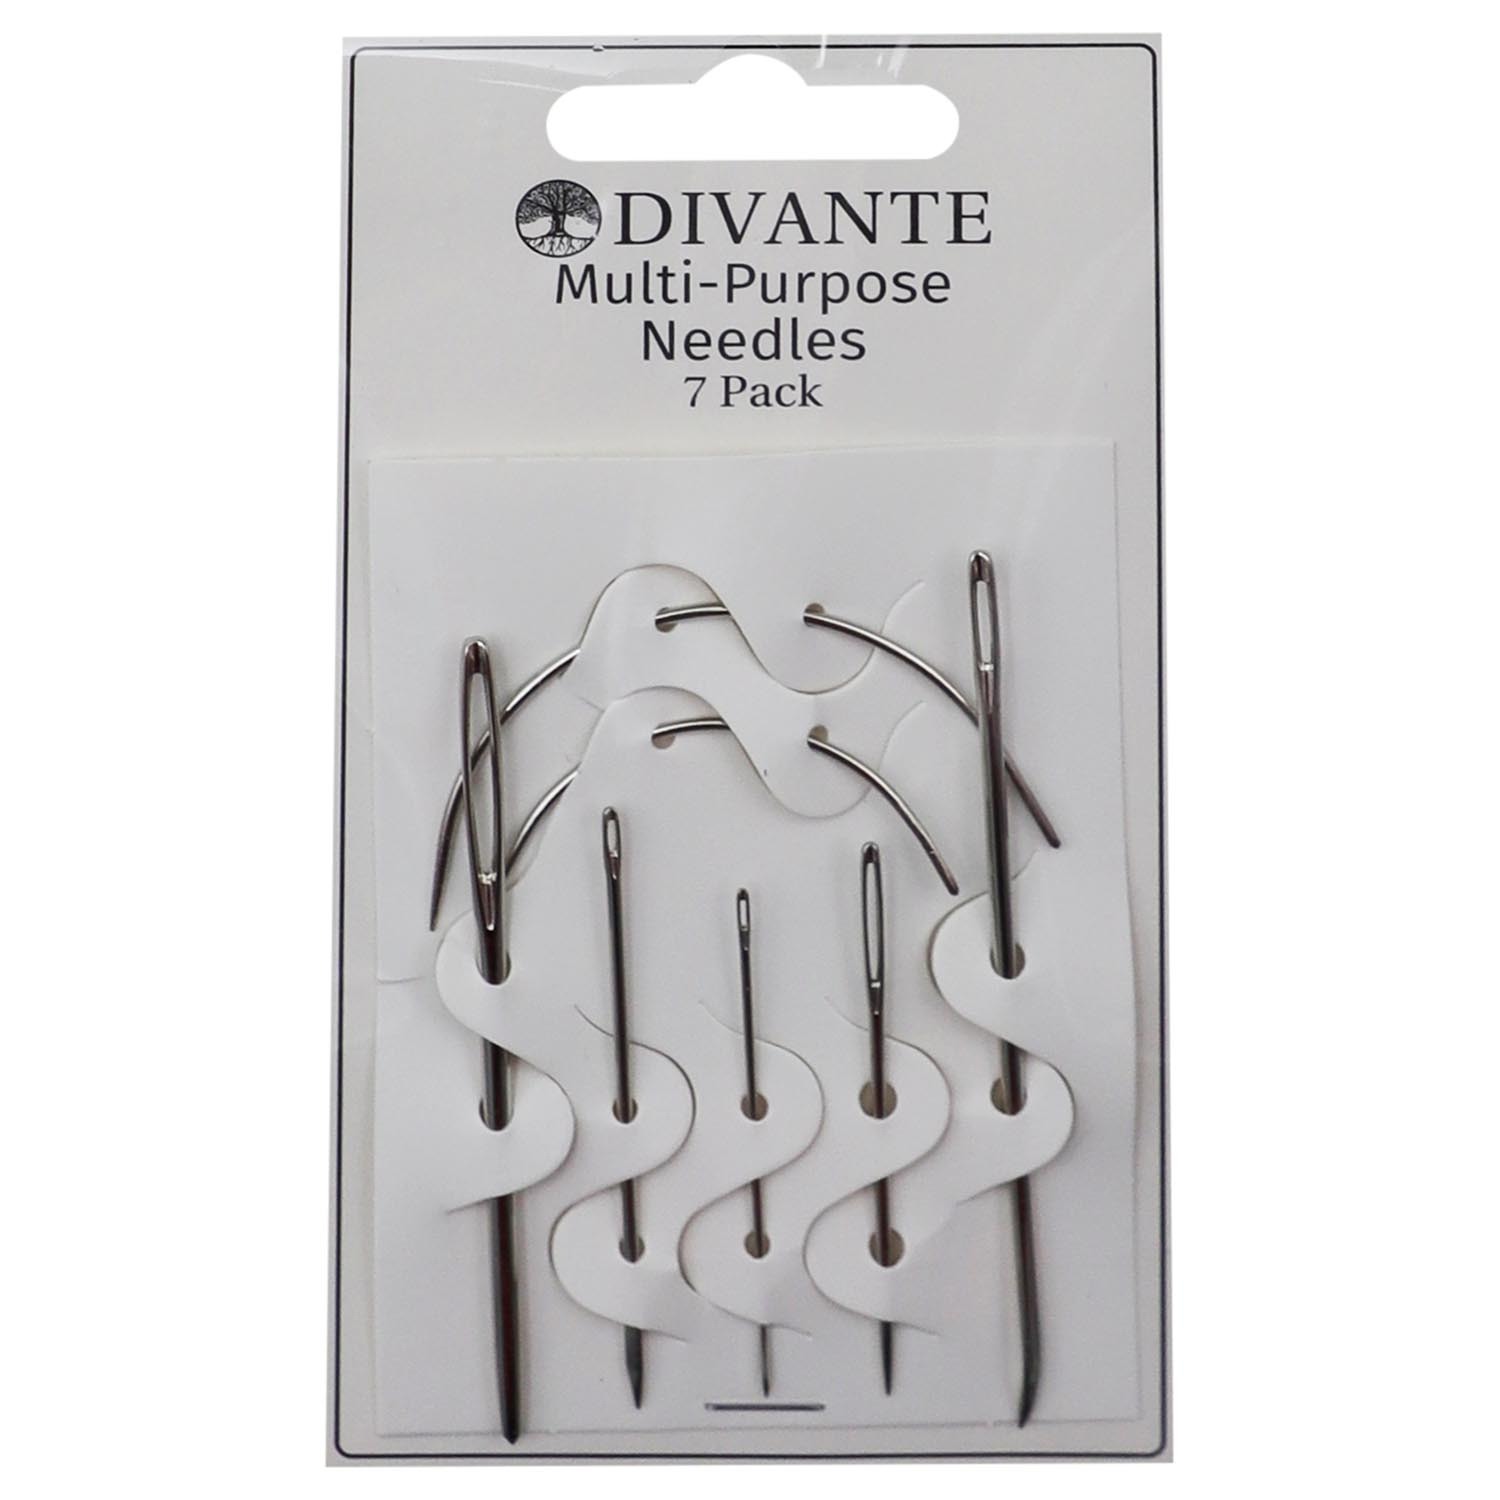 Divante Multi Purpose Needles Image